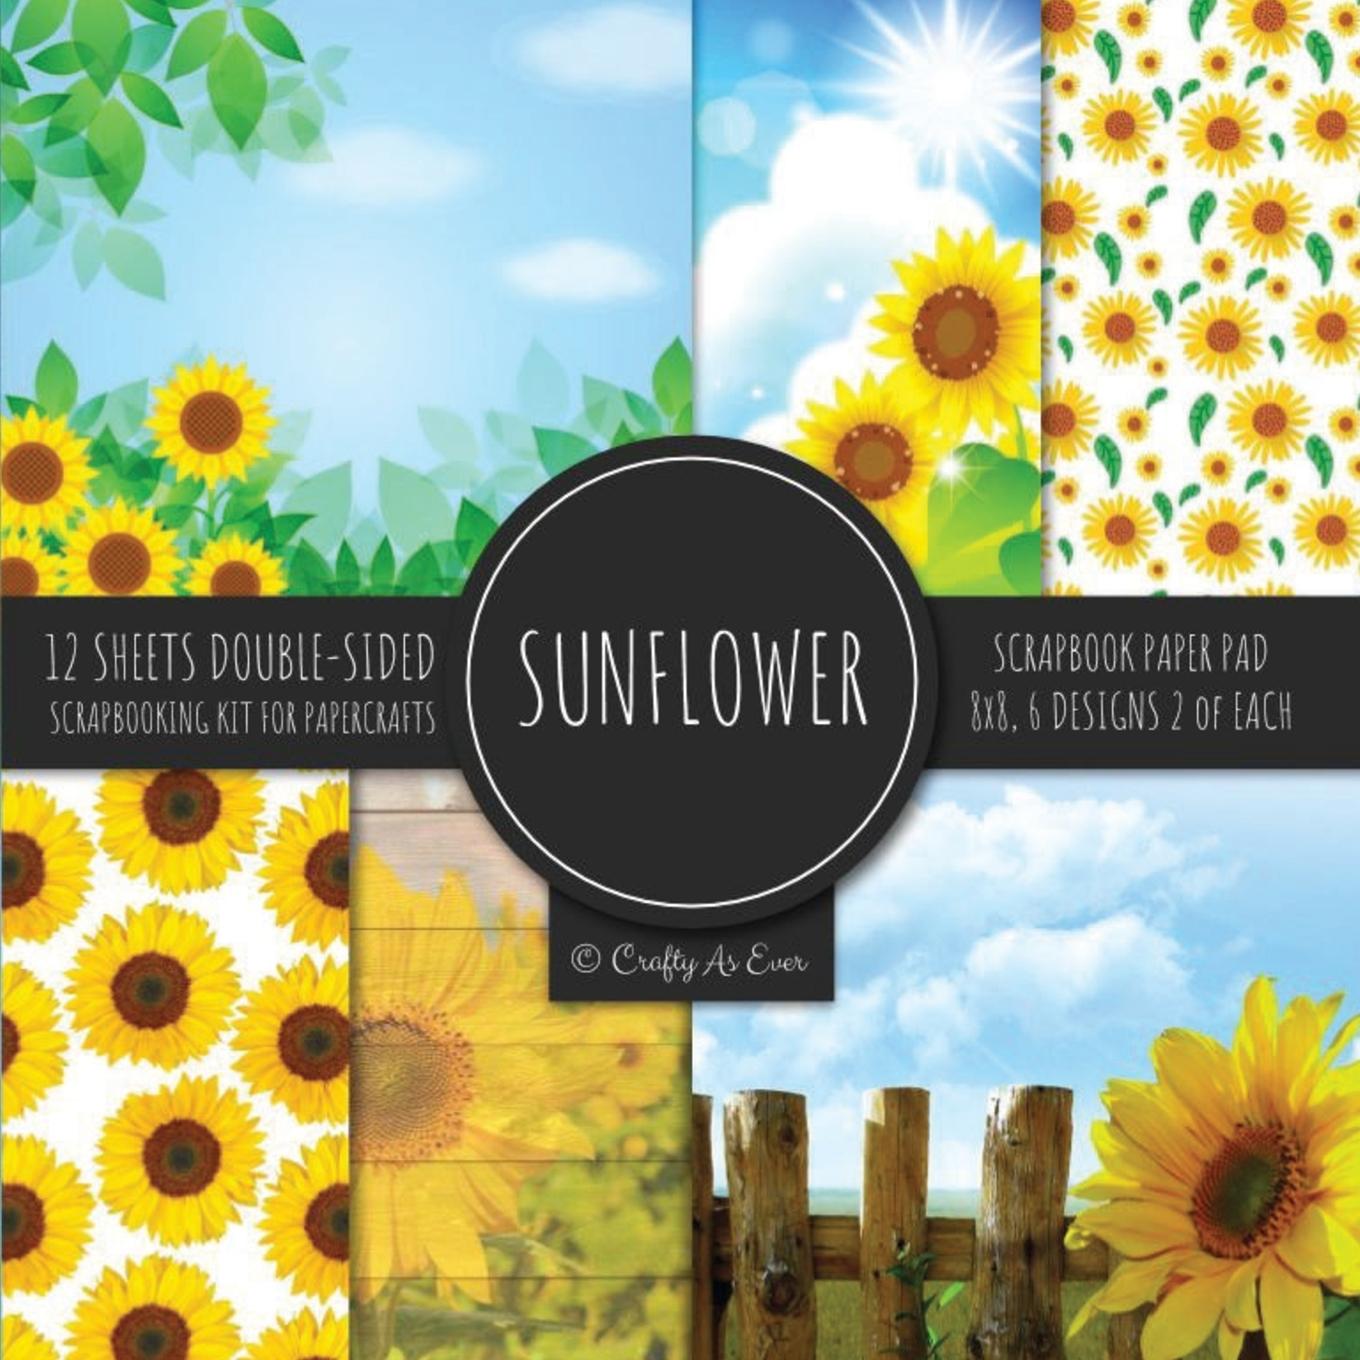 Carte Sunflower Scrapbook Paper Pad 8x8 Scrapbooking Kit for Papercrafts, Cardmaking, Printmaking, DIY Crafts, Botanical Themed, Designs, Borders, Backgroun Crafty as Ever